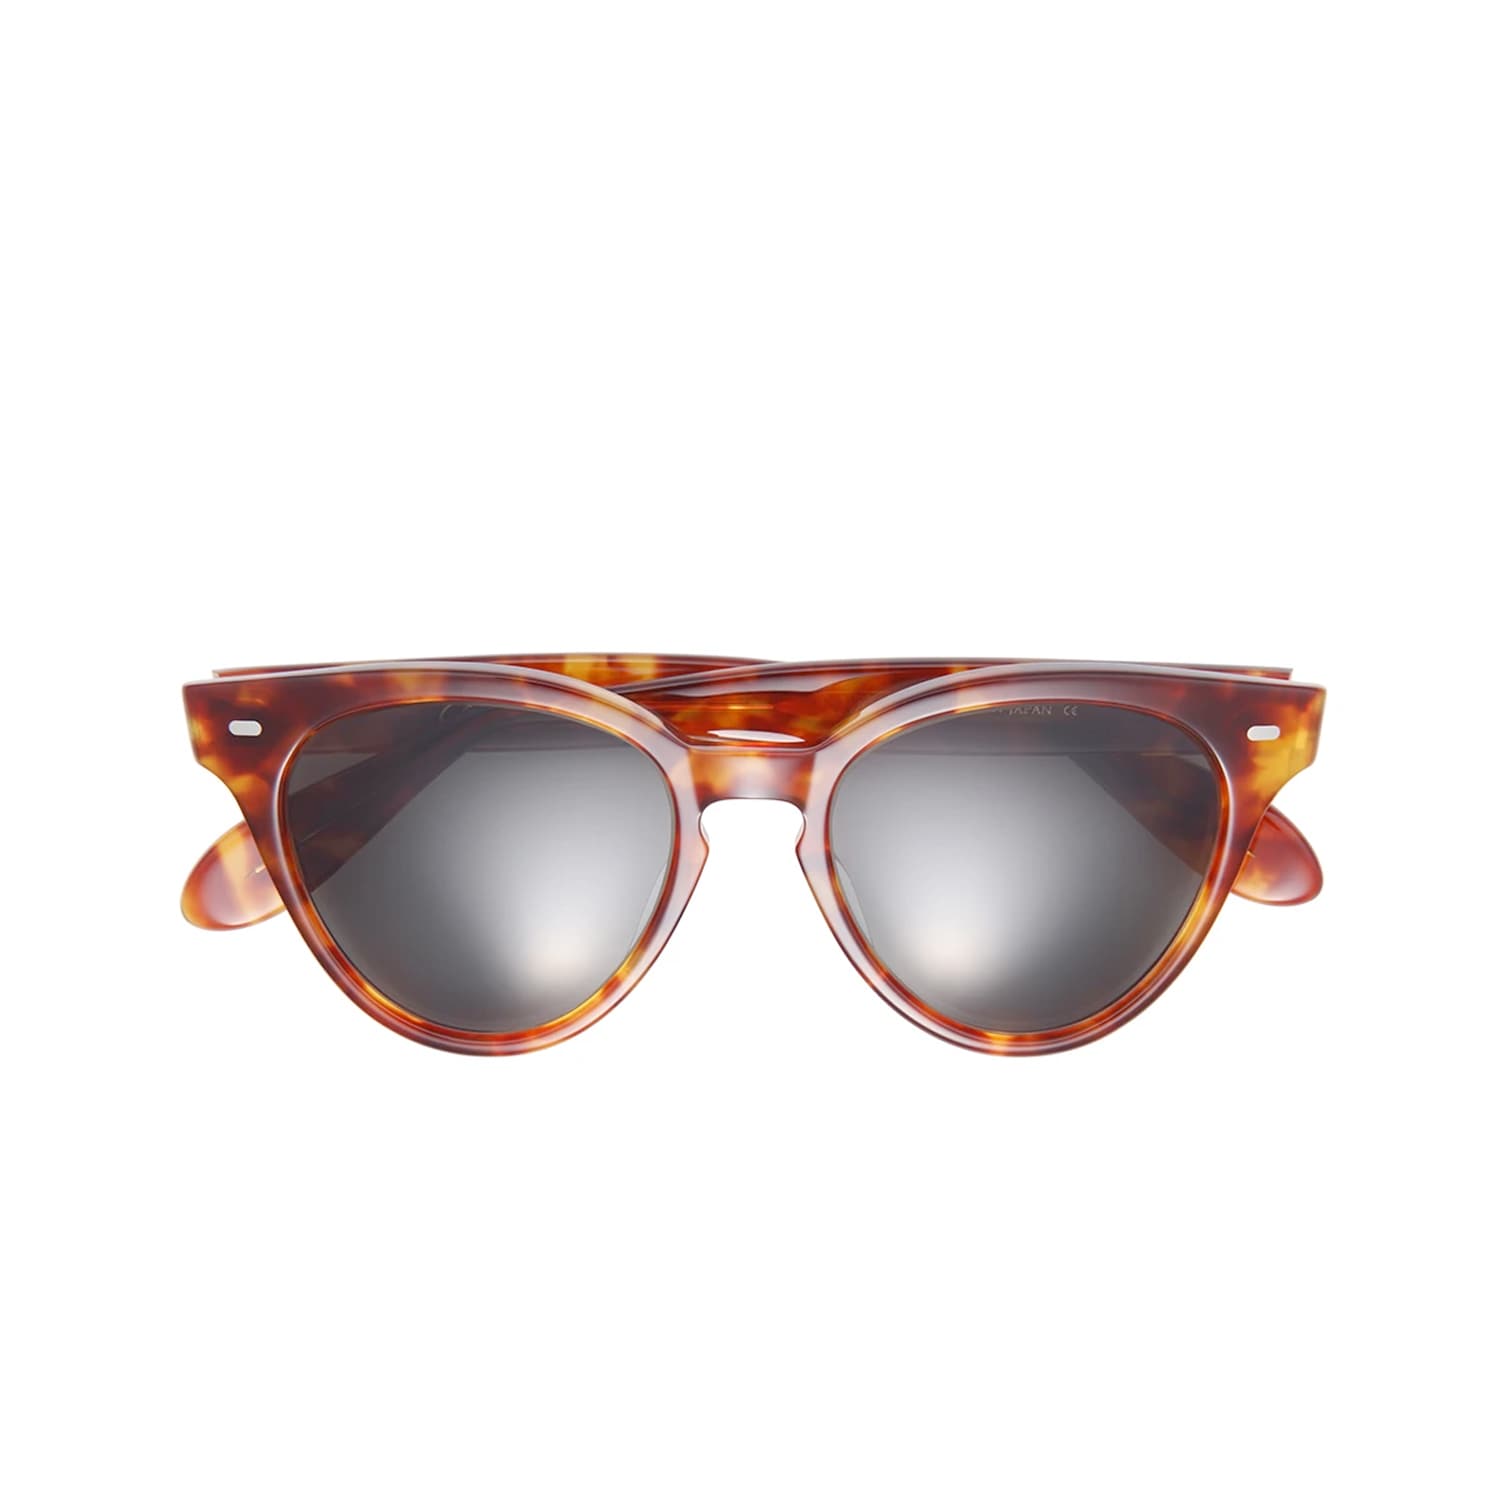 Lot. 499 "Dixon" Sunglasses Red Brown/Smoke